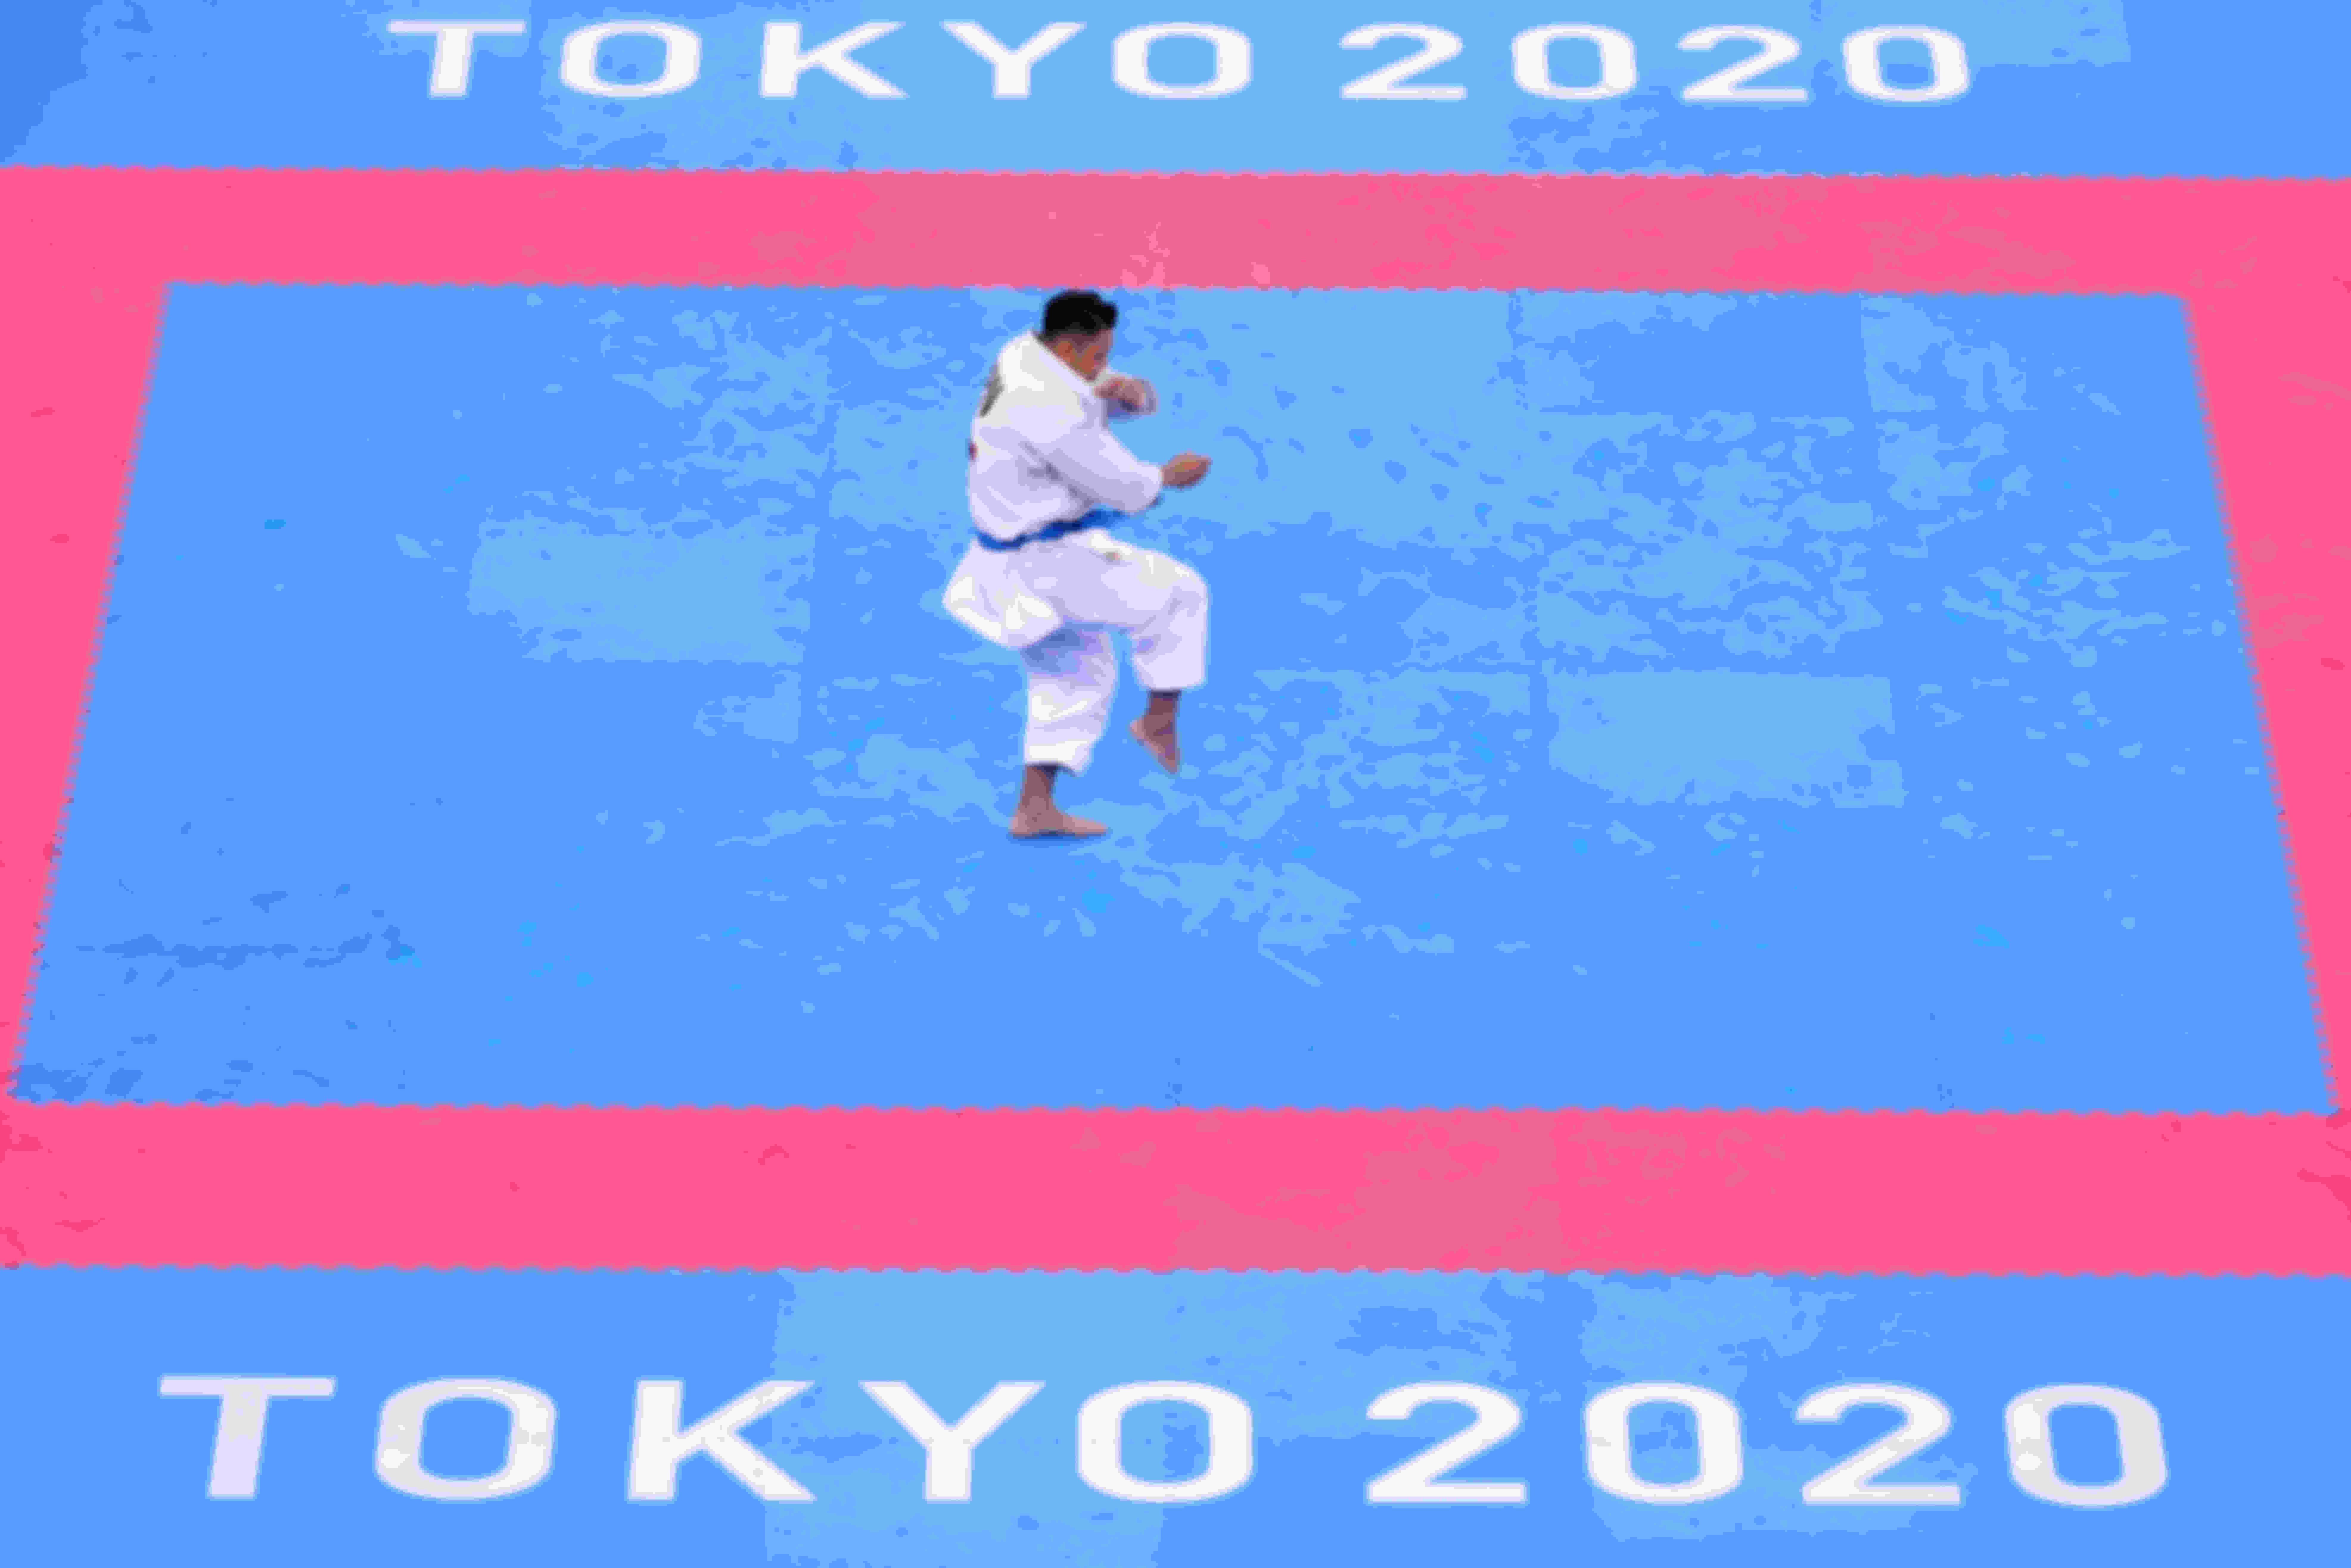 Ryo Kiyuna of Japan won the gold medal in the men's category in karate kata at the Tokyo 2020 Olympics.